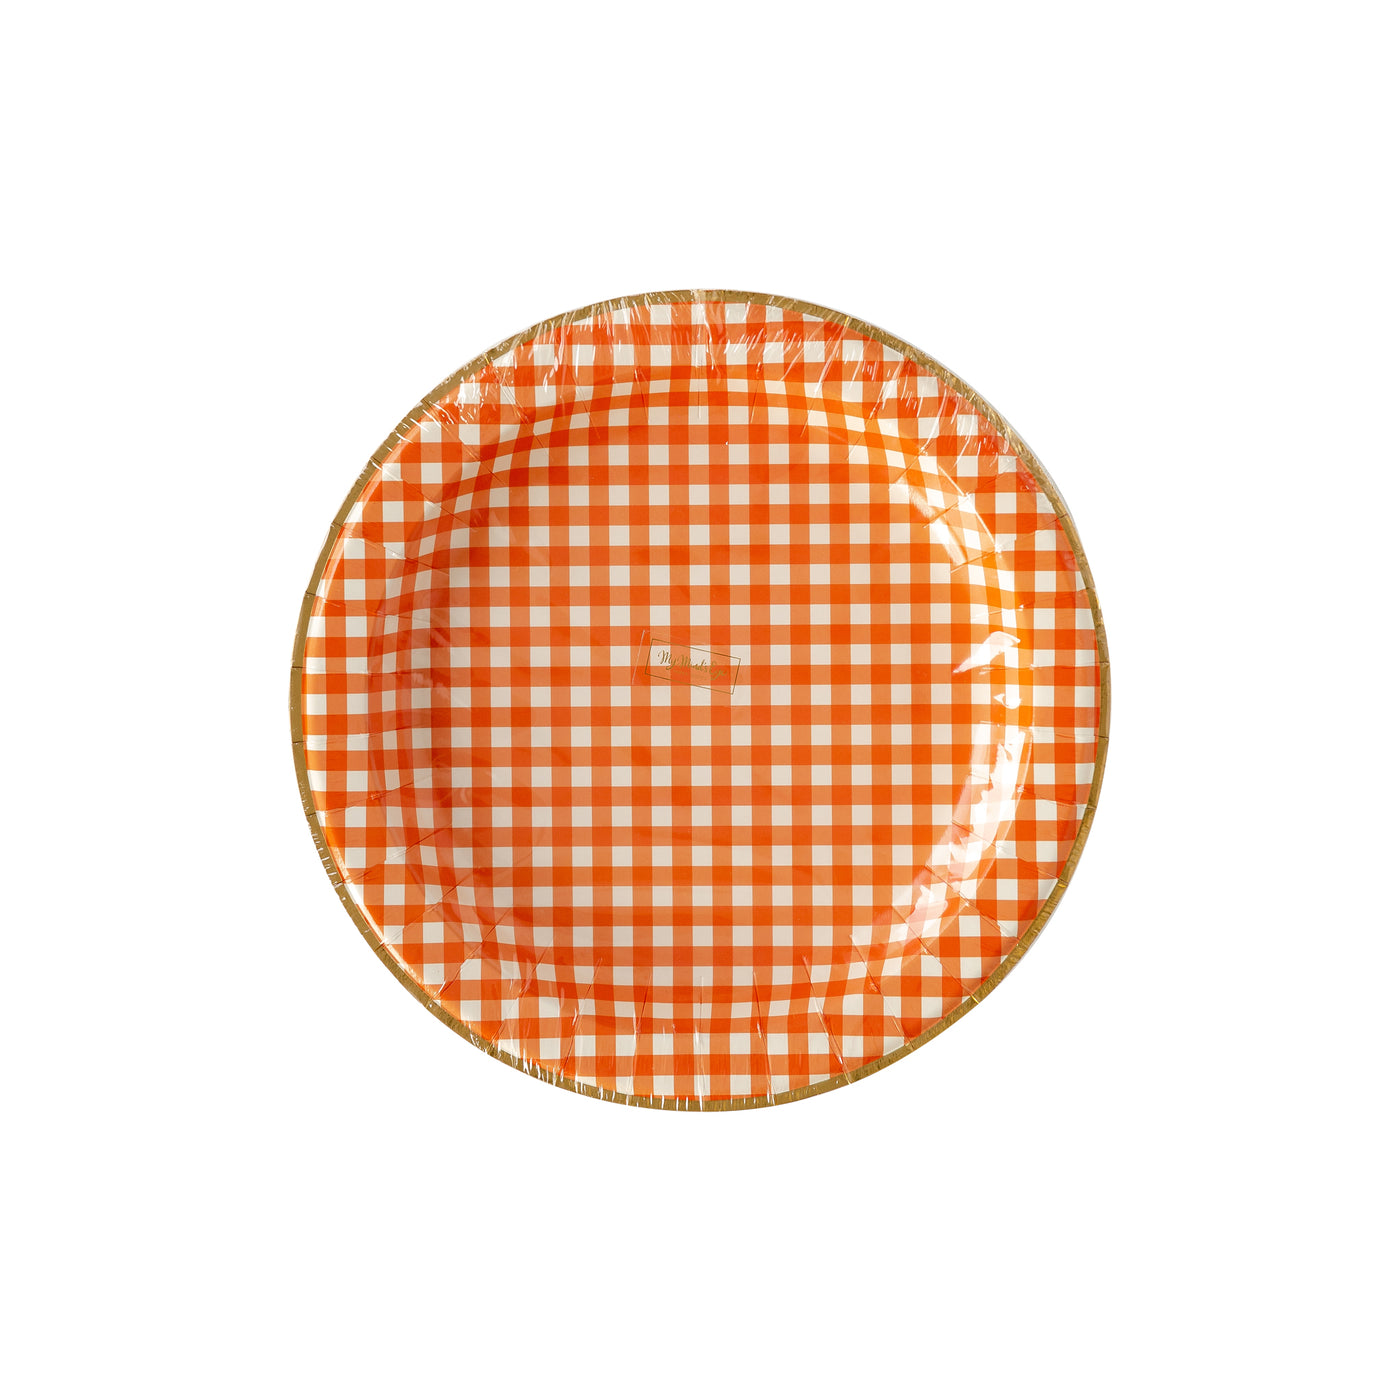 THP929 - Harvest Orange Gingham Check 11" Plate